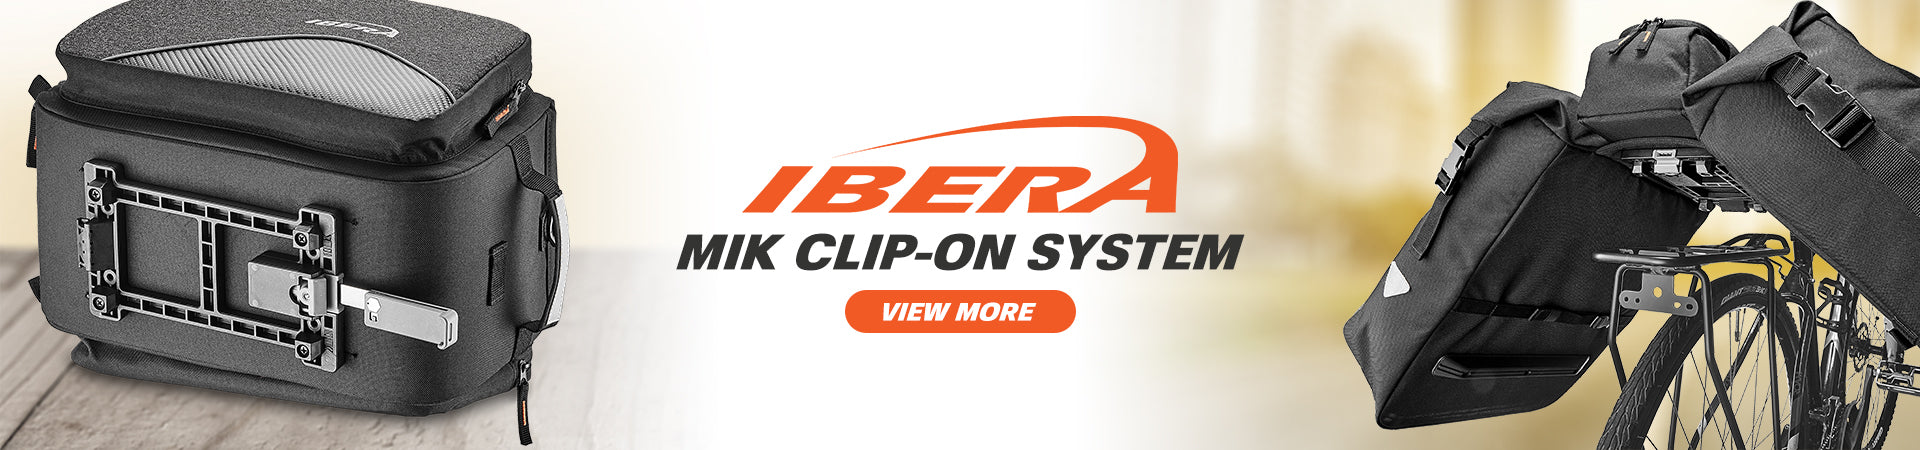 Ibera MIK Clip-On System